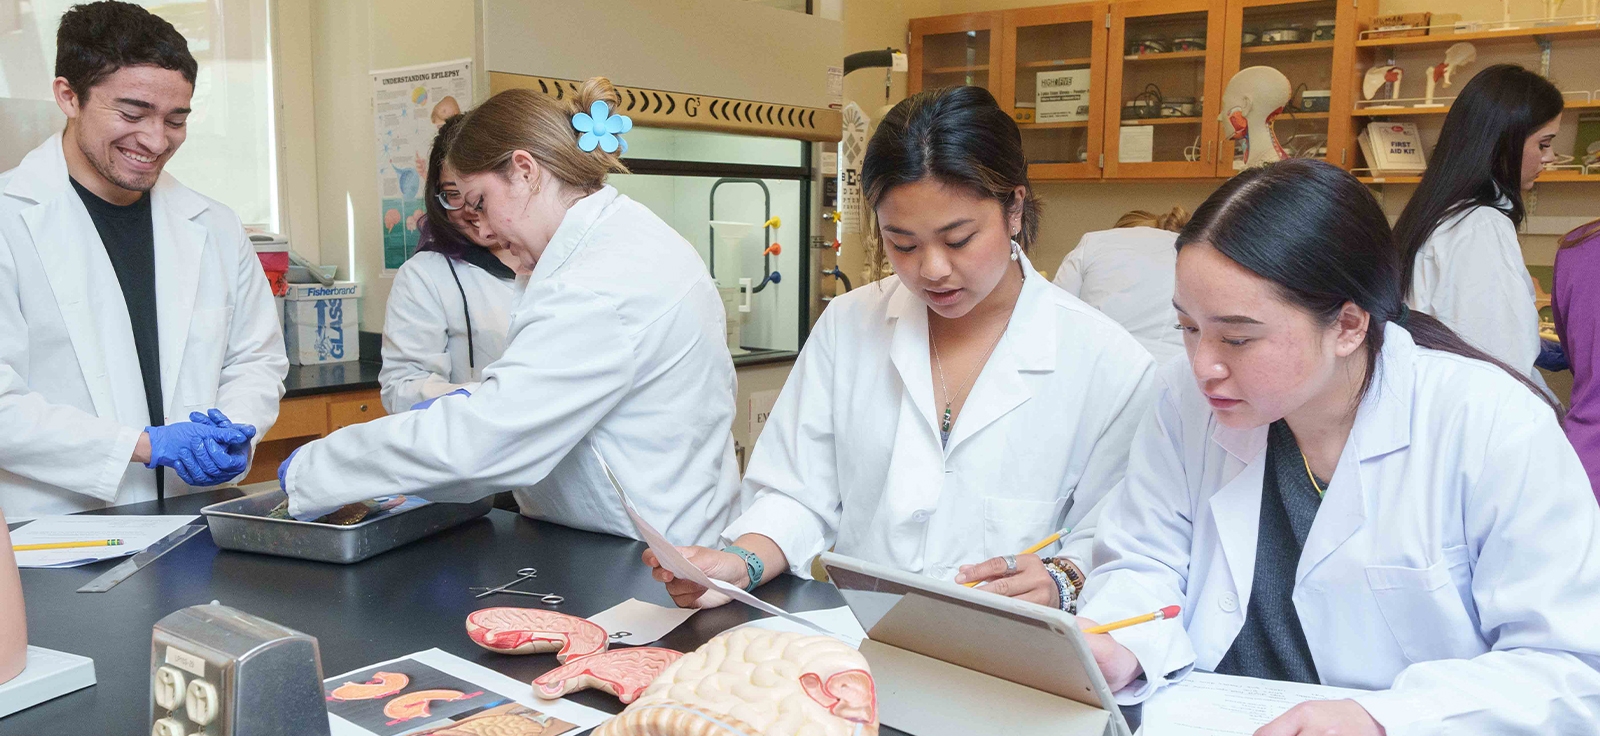 students analyzing anatomy in biology lab